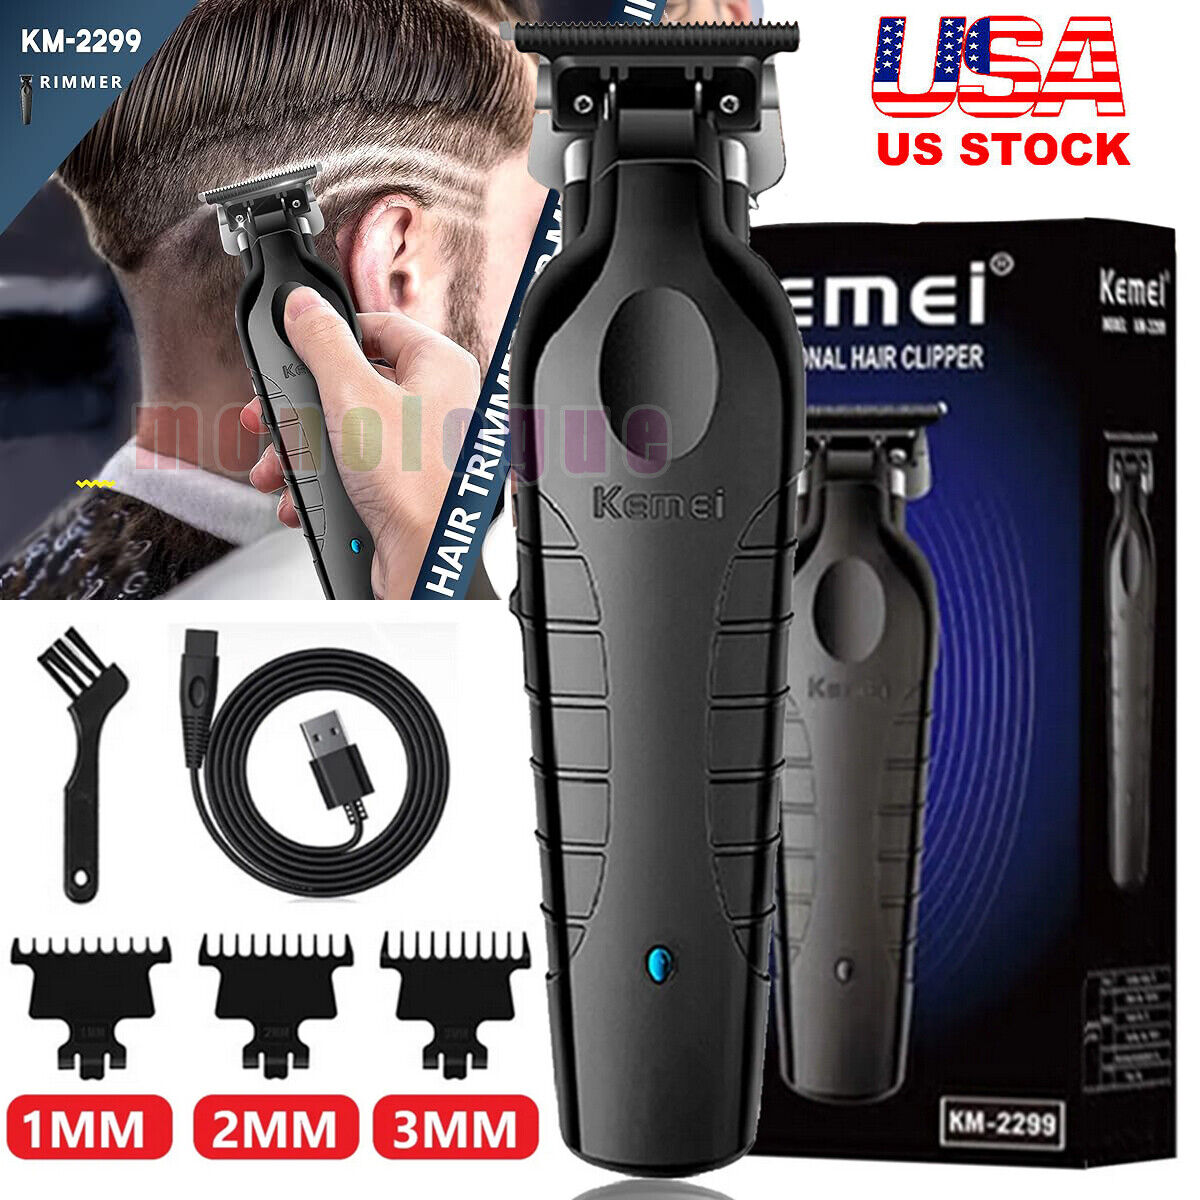 Kemei-2299 Cordless Hair Trimmer Clipper Professional Electric Cutting Machine